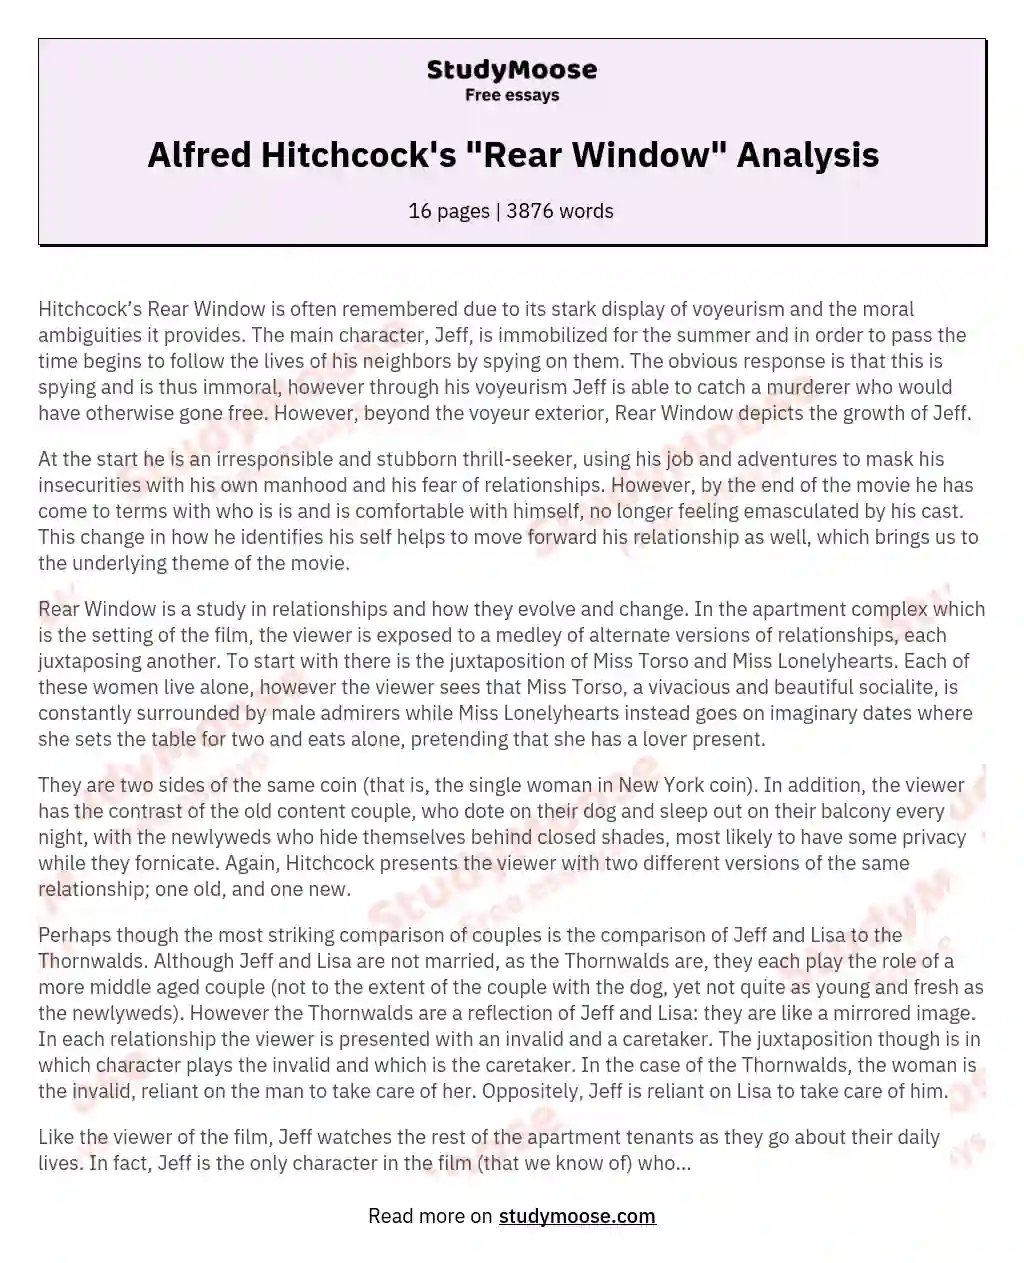 Alfred Hitchcock's "Rear Window" Analysis essay